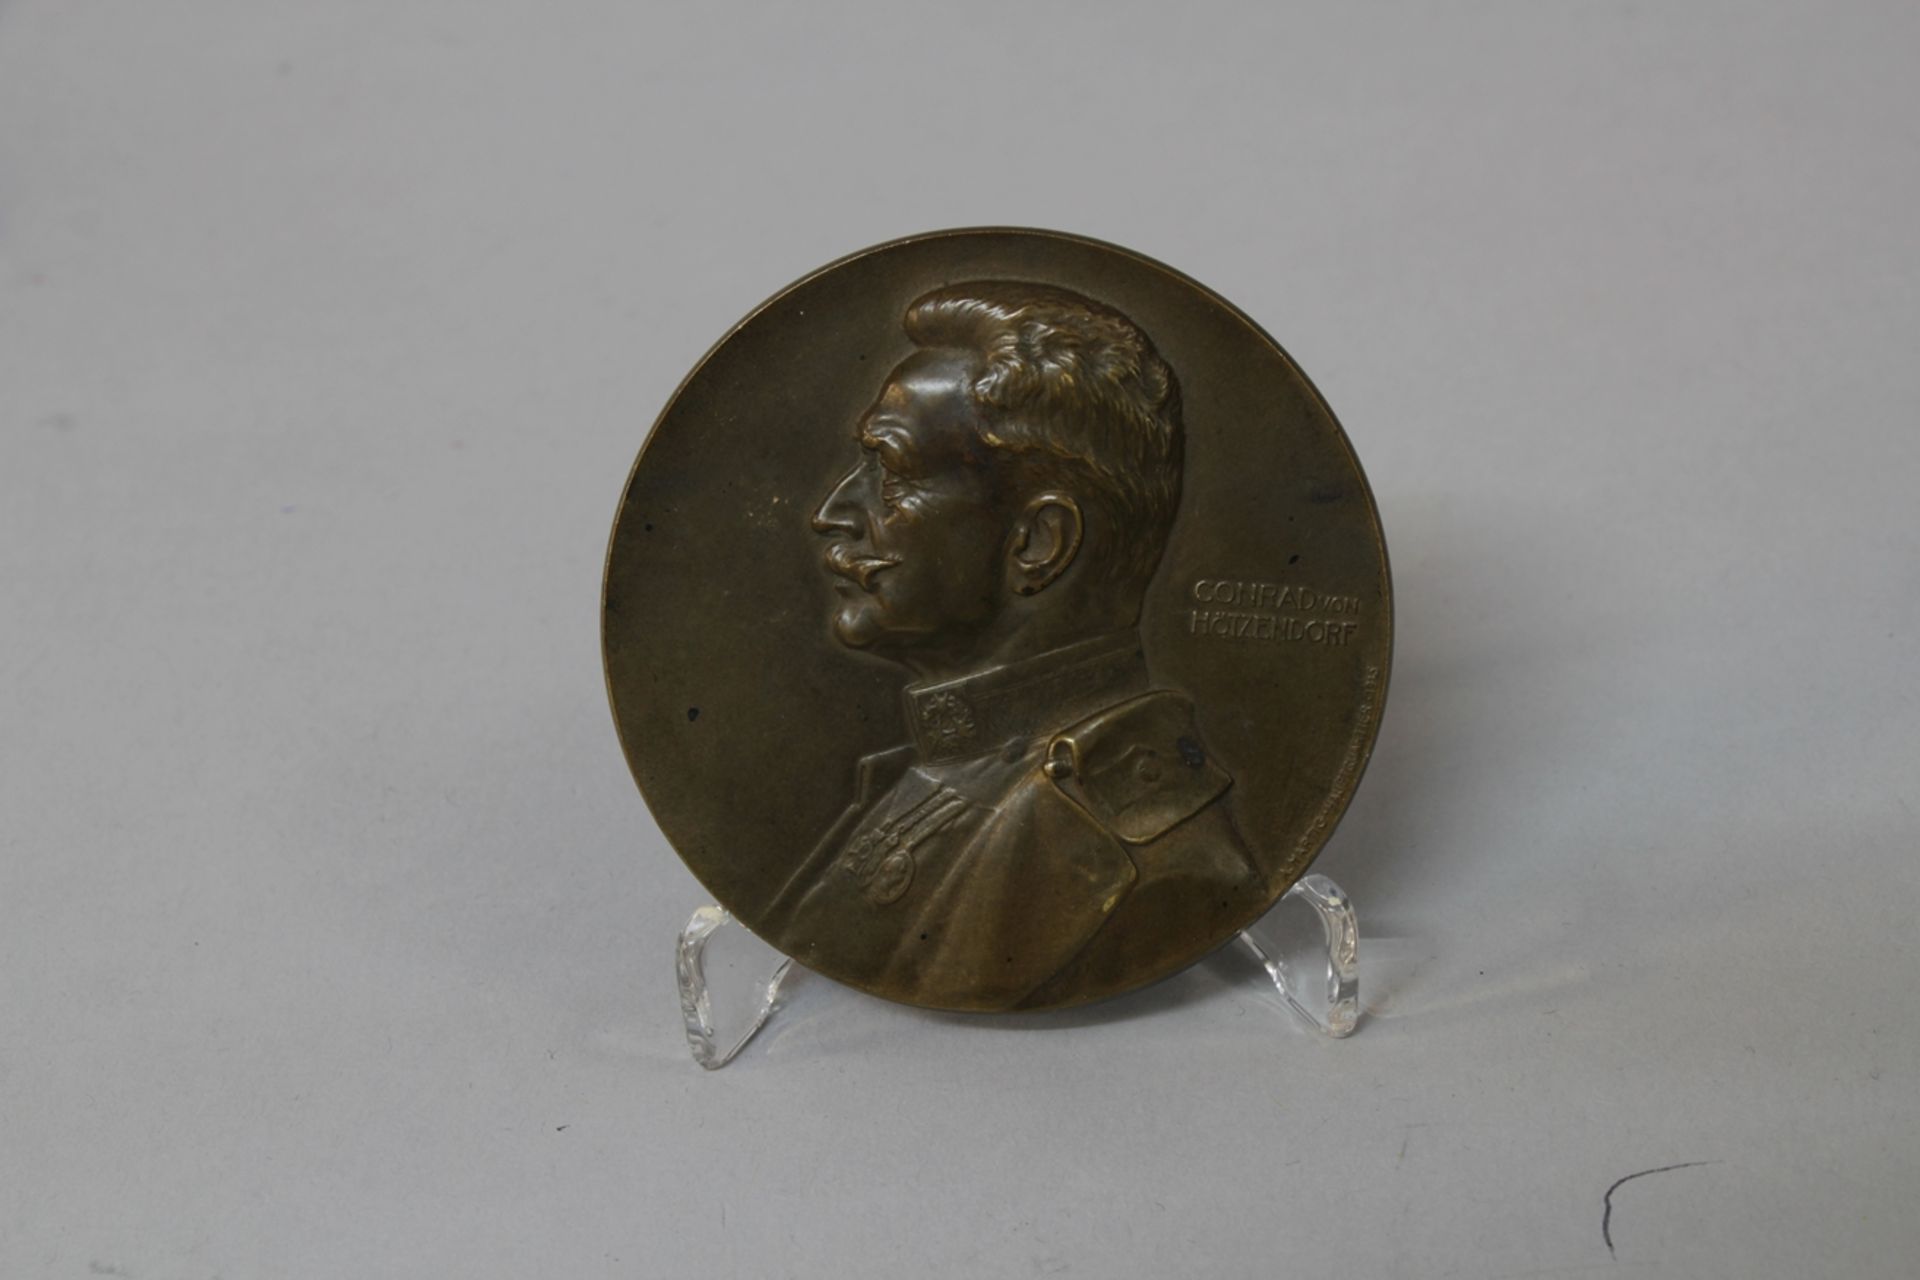 Bronze Medaille